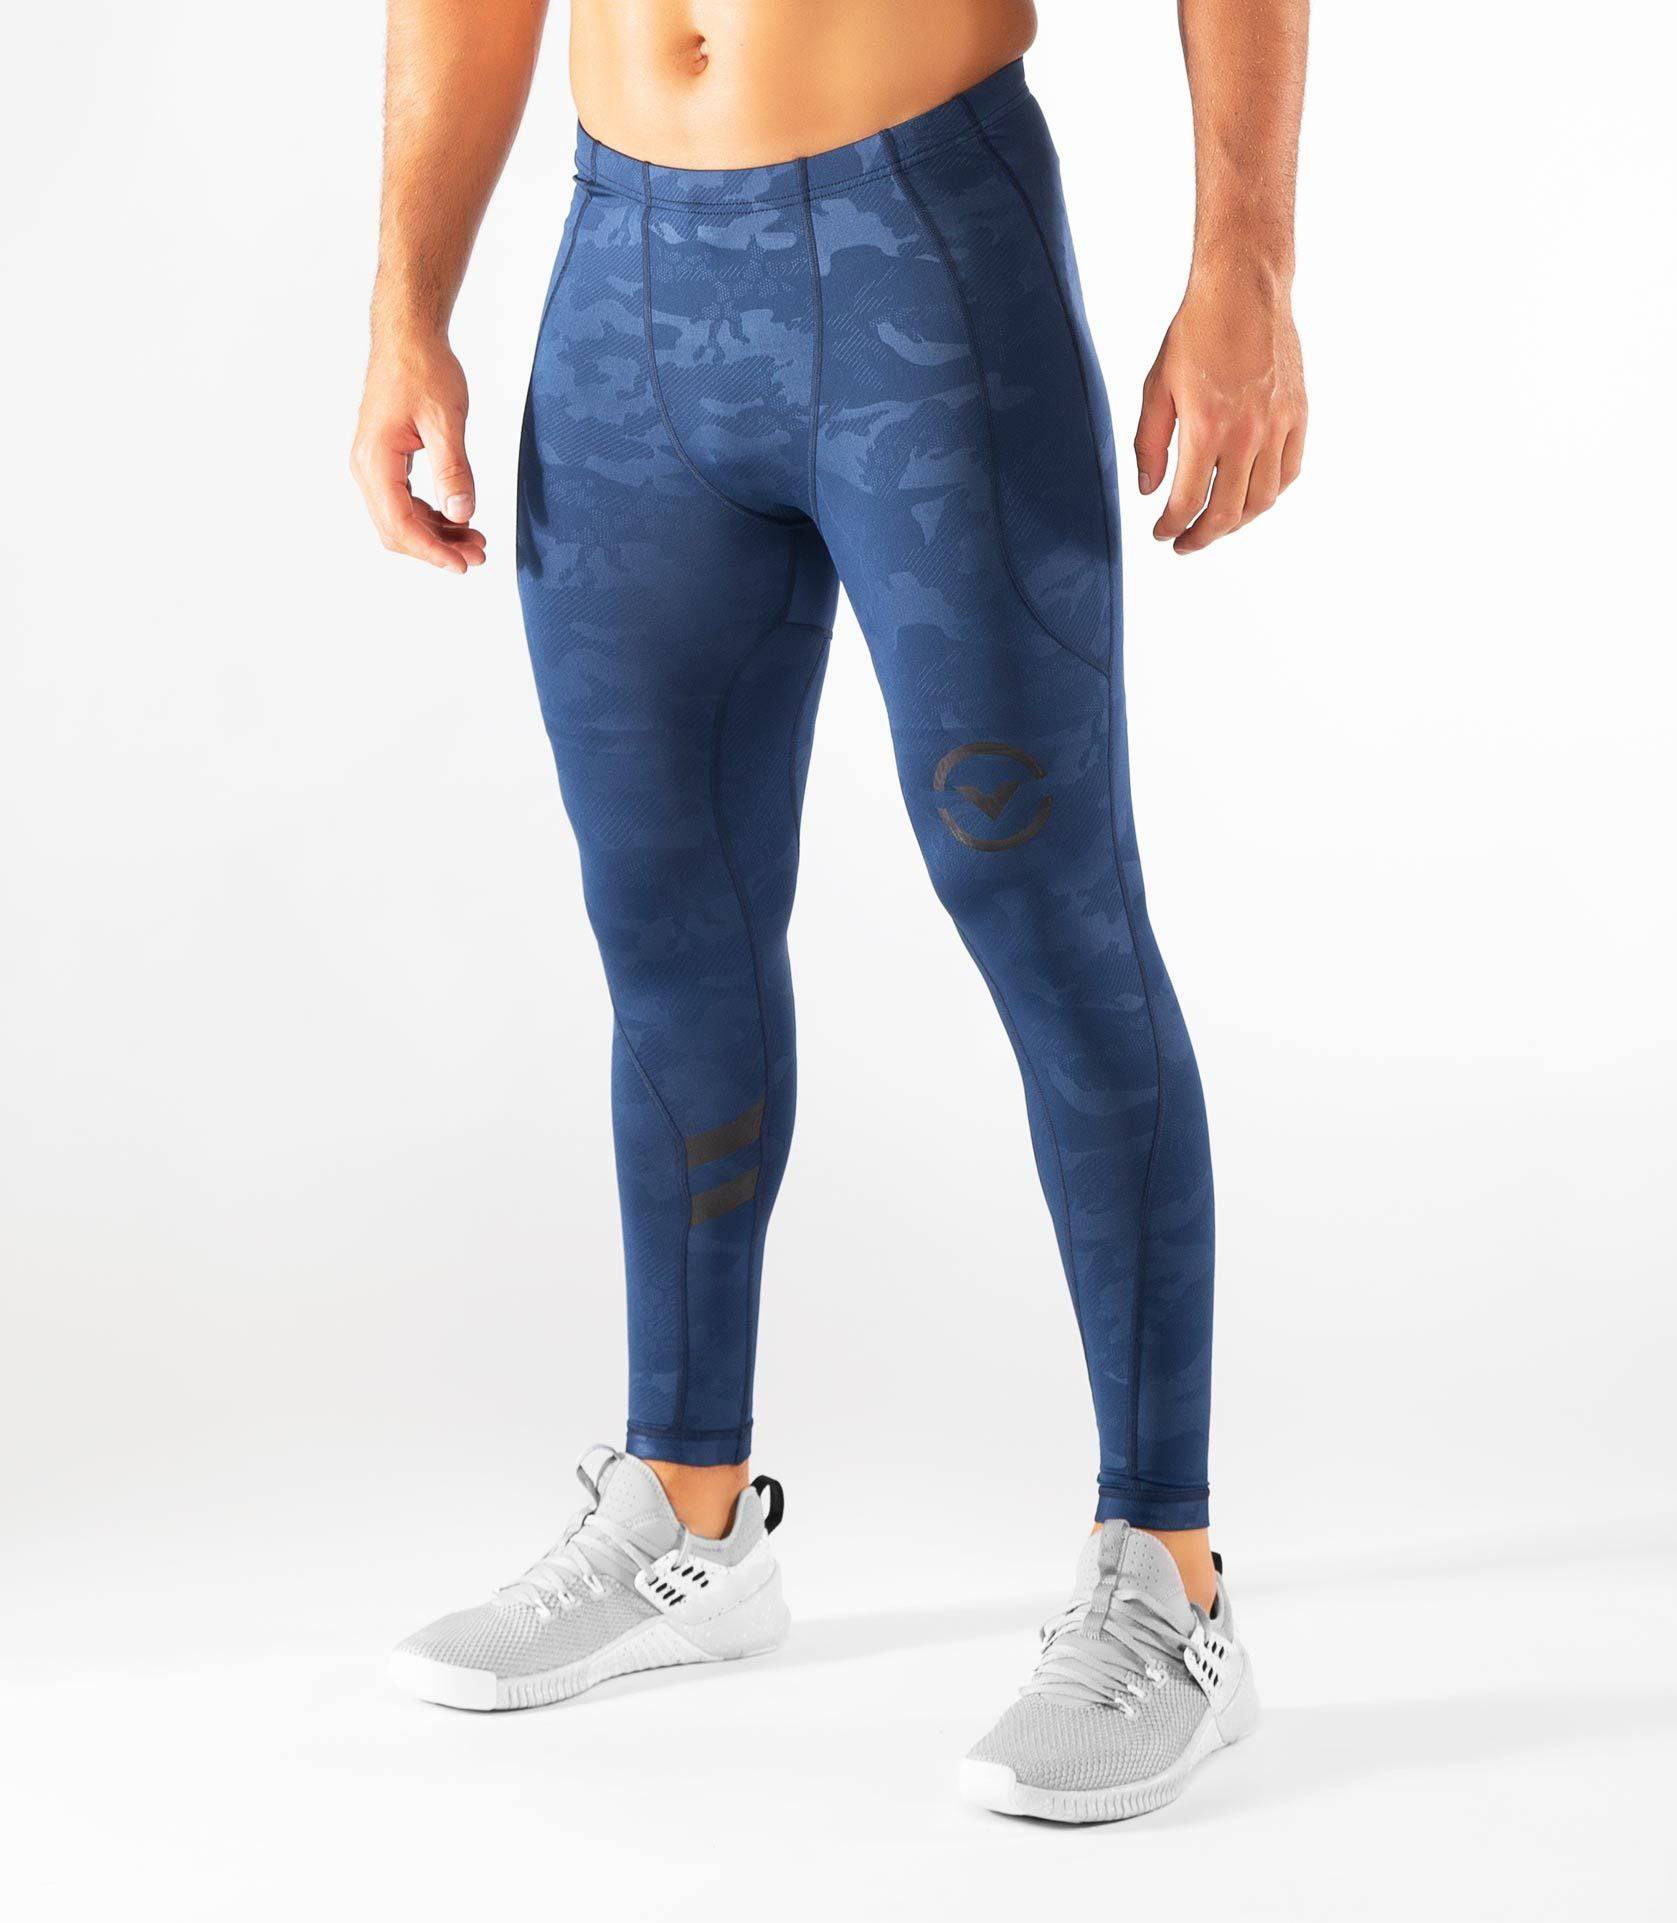 XTC Gear  Pants & Shorts